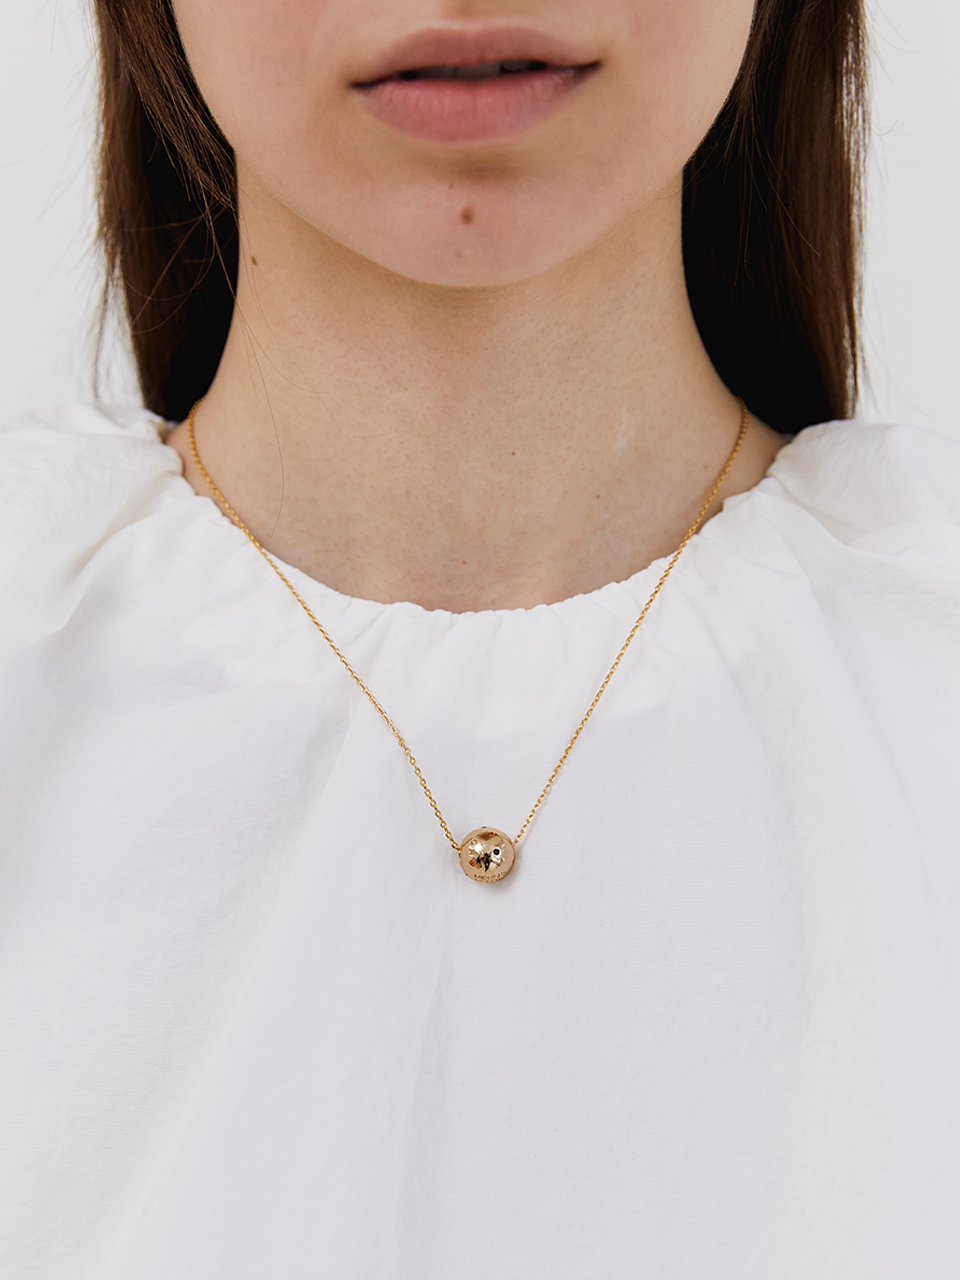 cosmic pierce necklace - gold